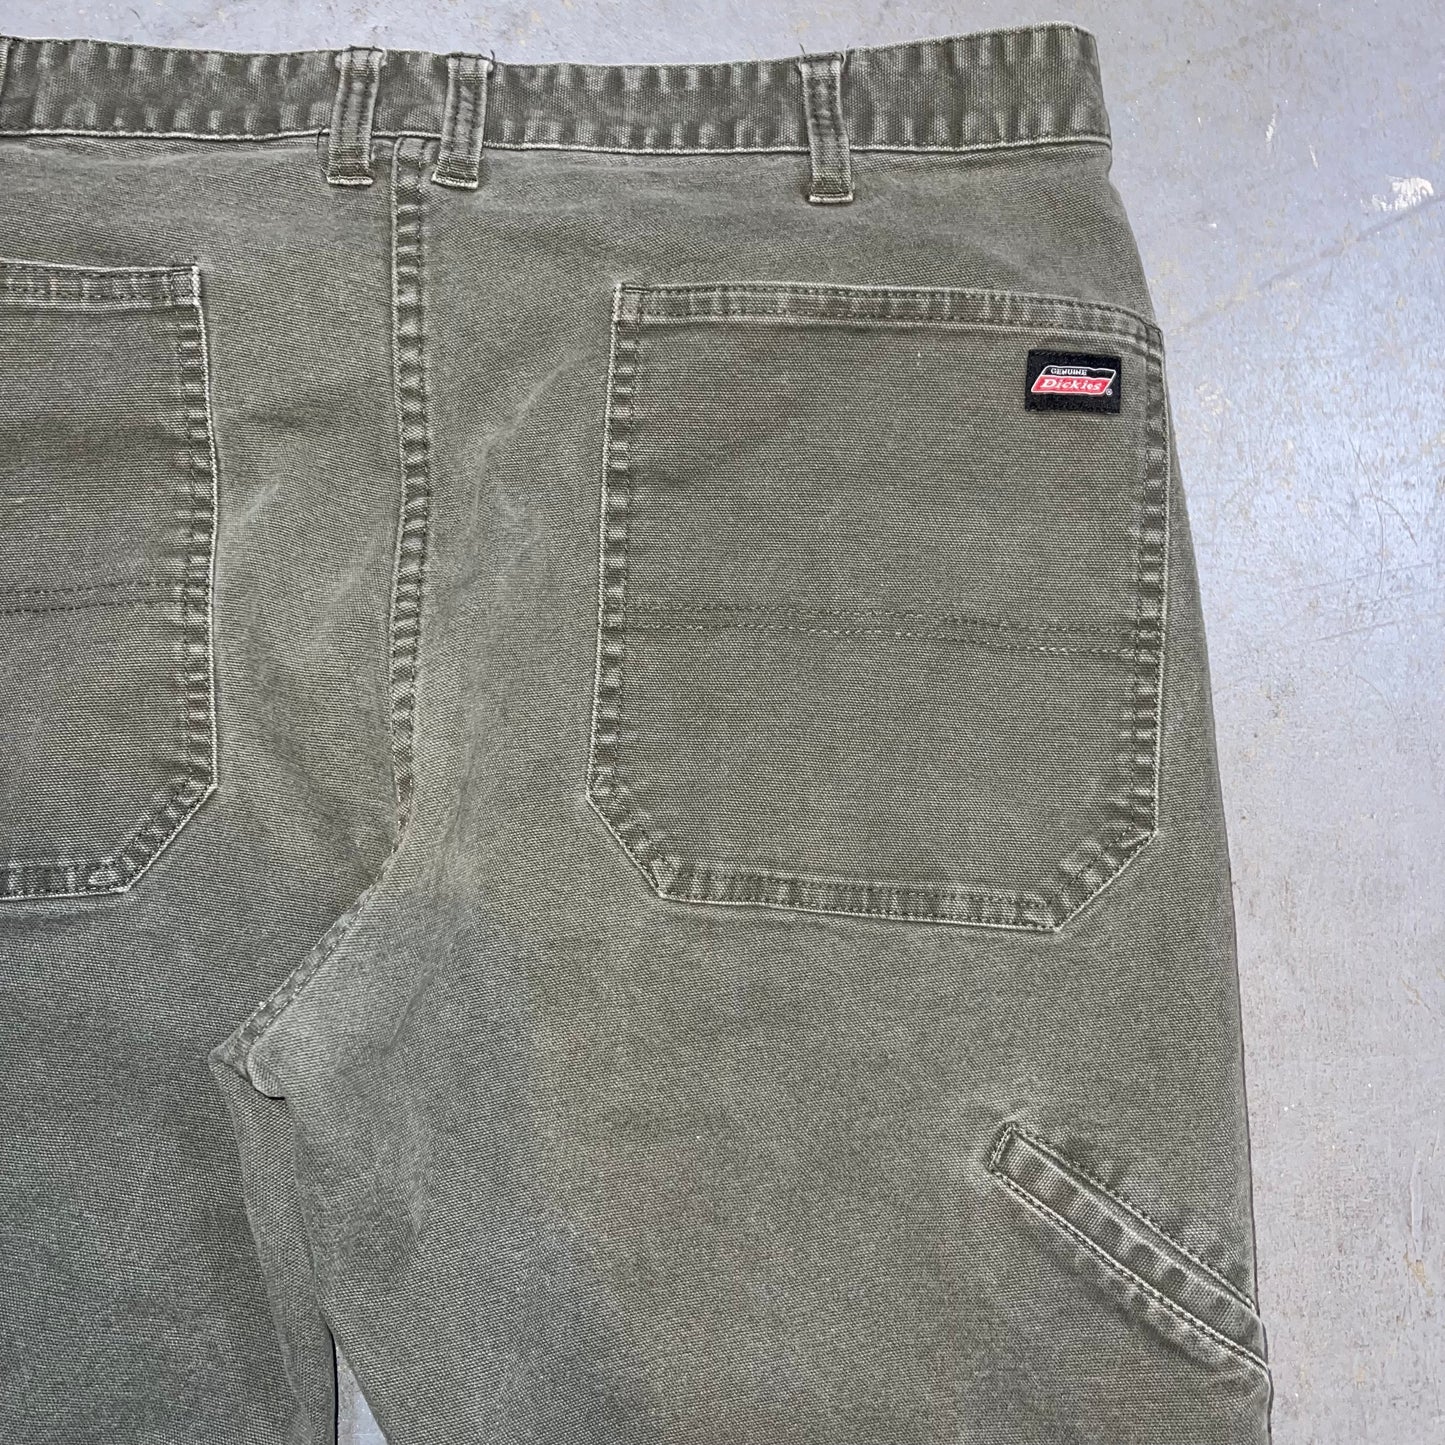 Y2K Dickies Carpenter Workwear Pants. Size 34x30